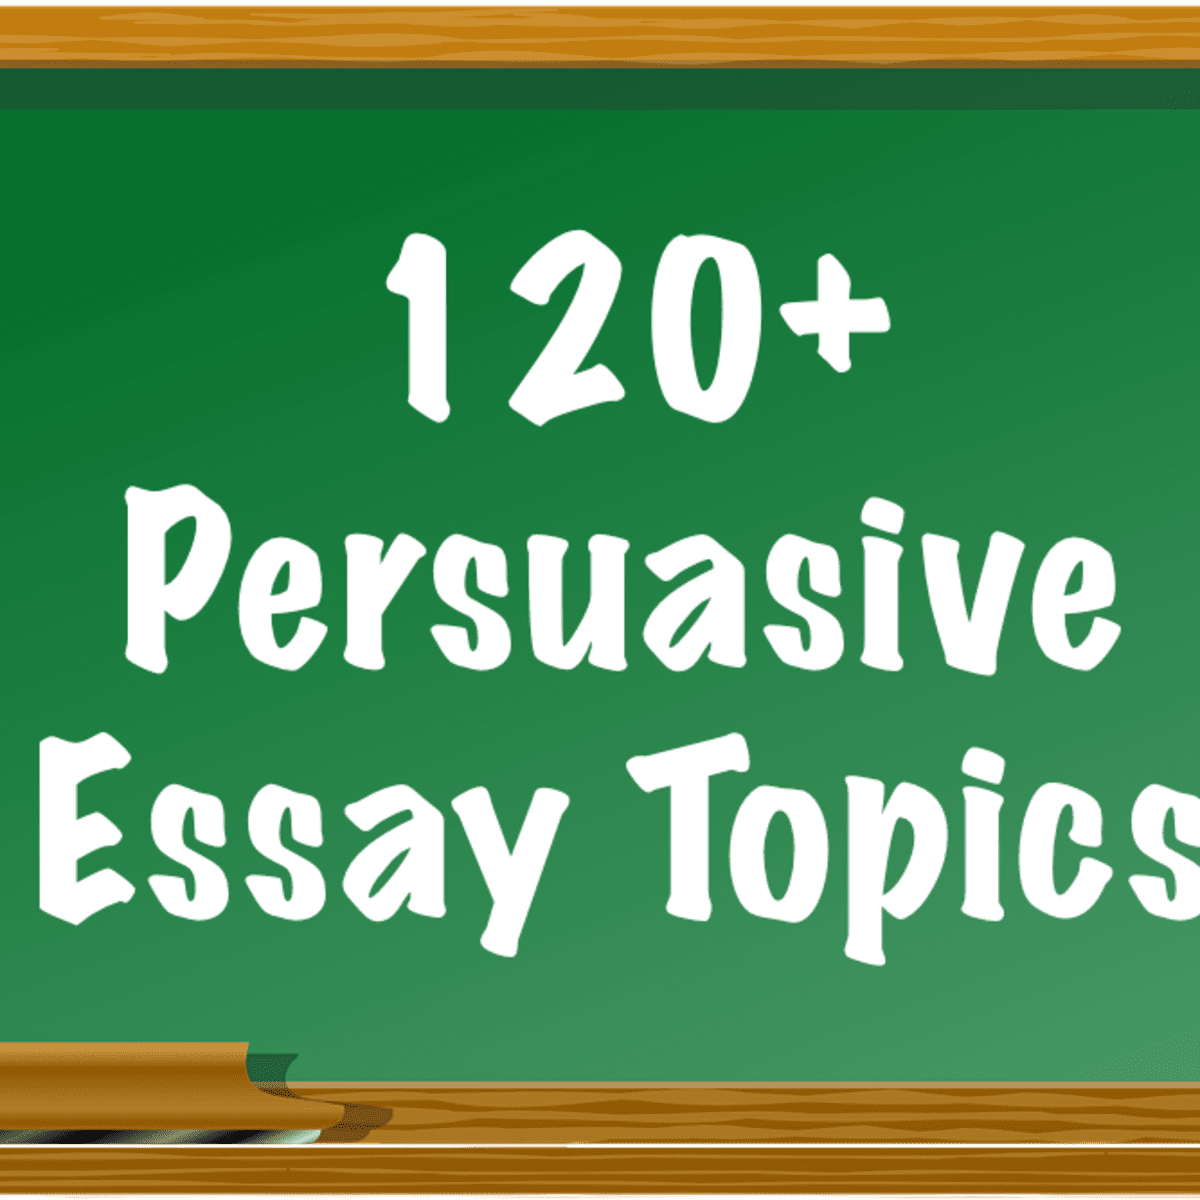 120+ Persuasive Essay Topics - Owlcation